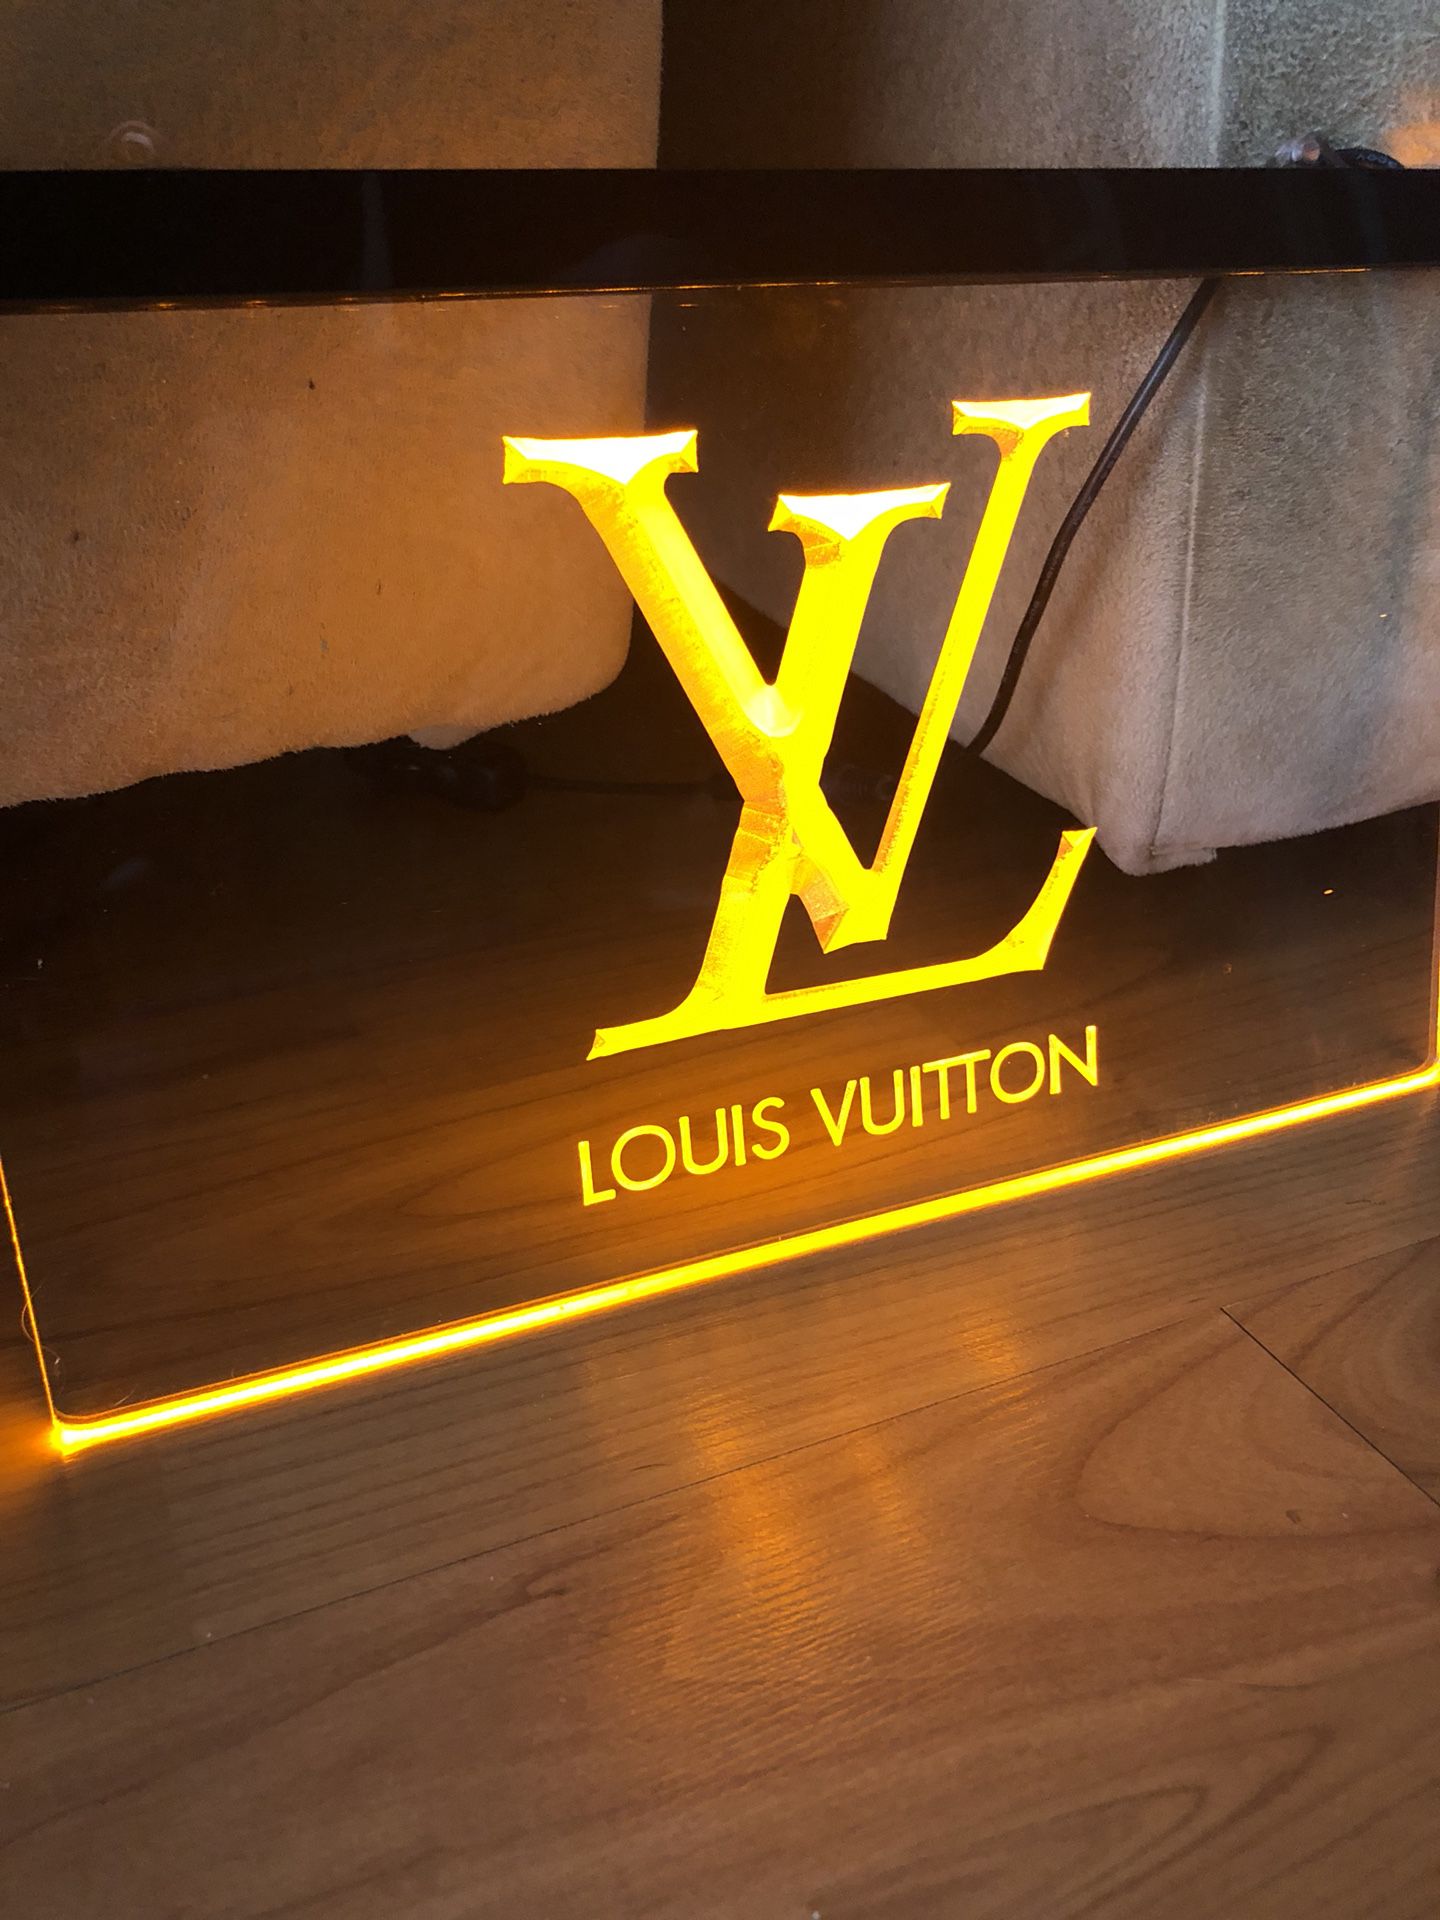 LOUIS VUITTON LED NEON LIGHT SIGN SIZE 8x12 for Sale in Buena Park